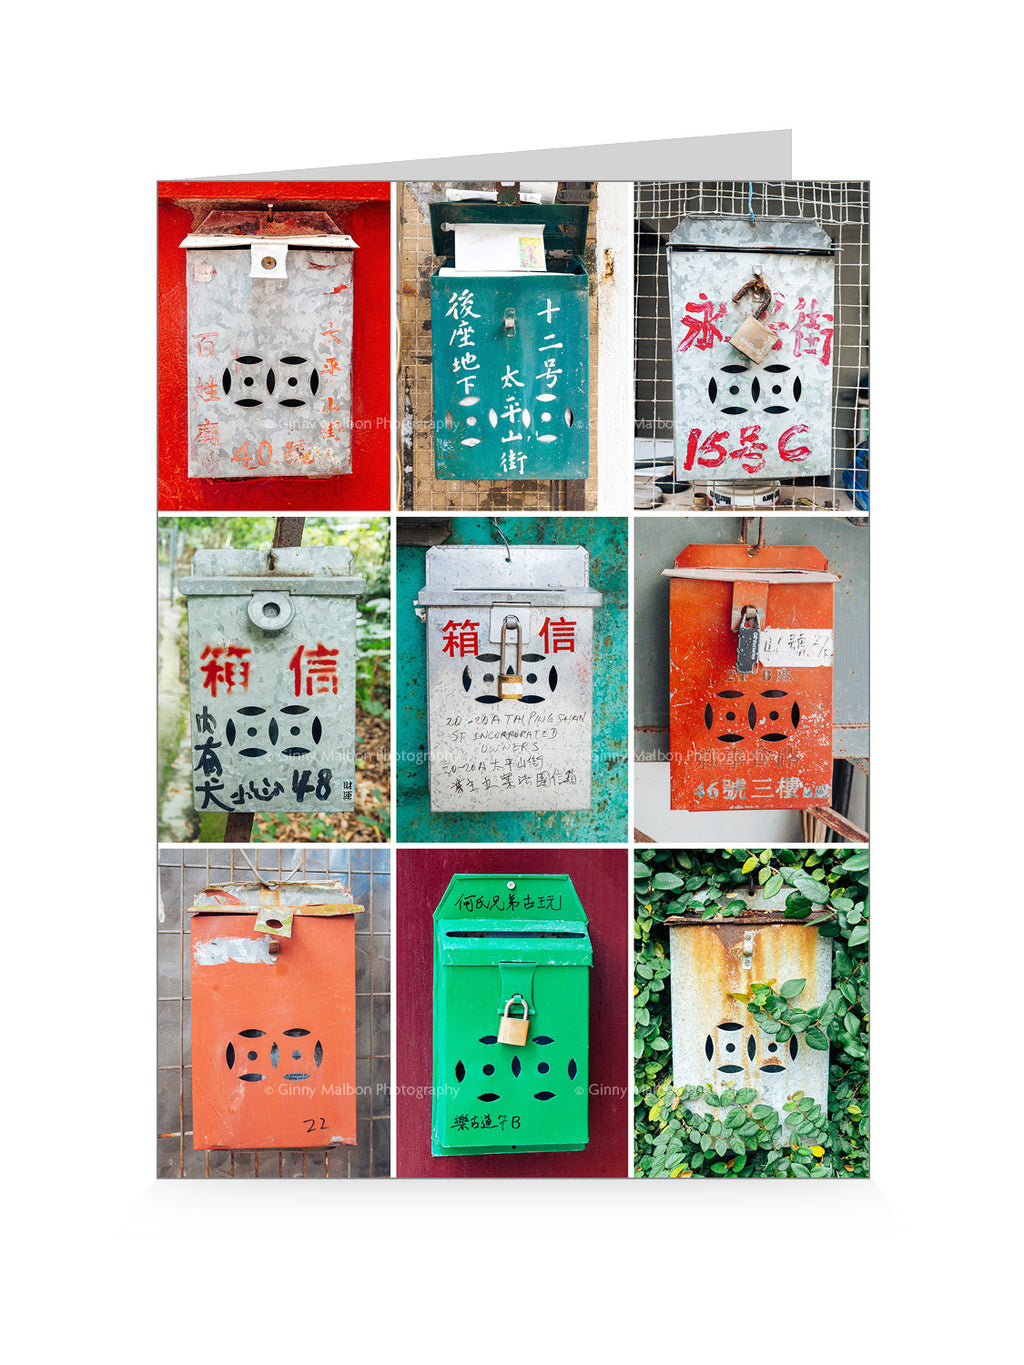 Hong Kong Letterboxes Greeting Card